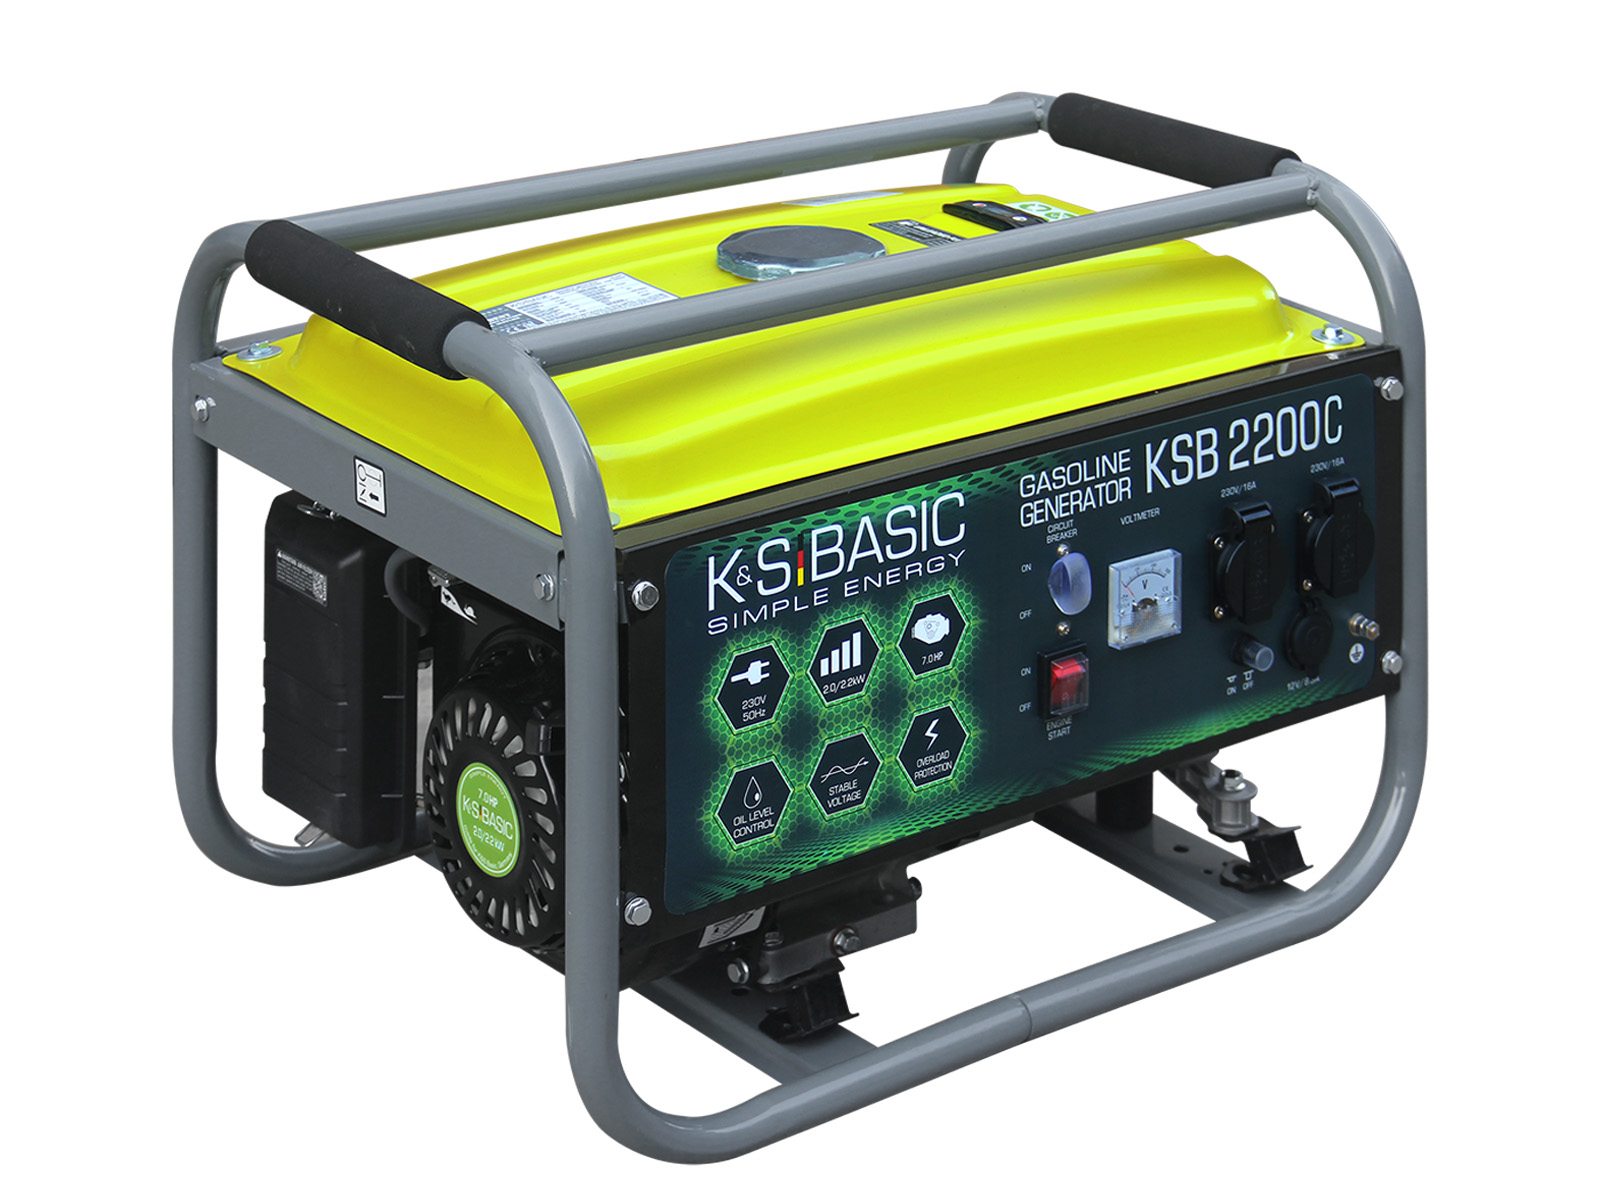 Gasoline generator "K&S BASIC" KSB 2200C